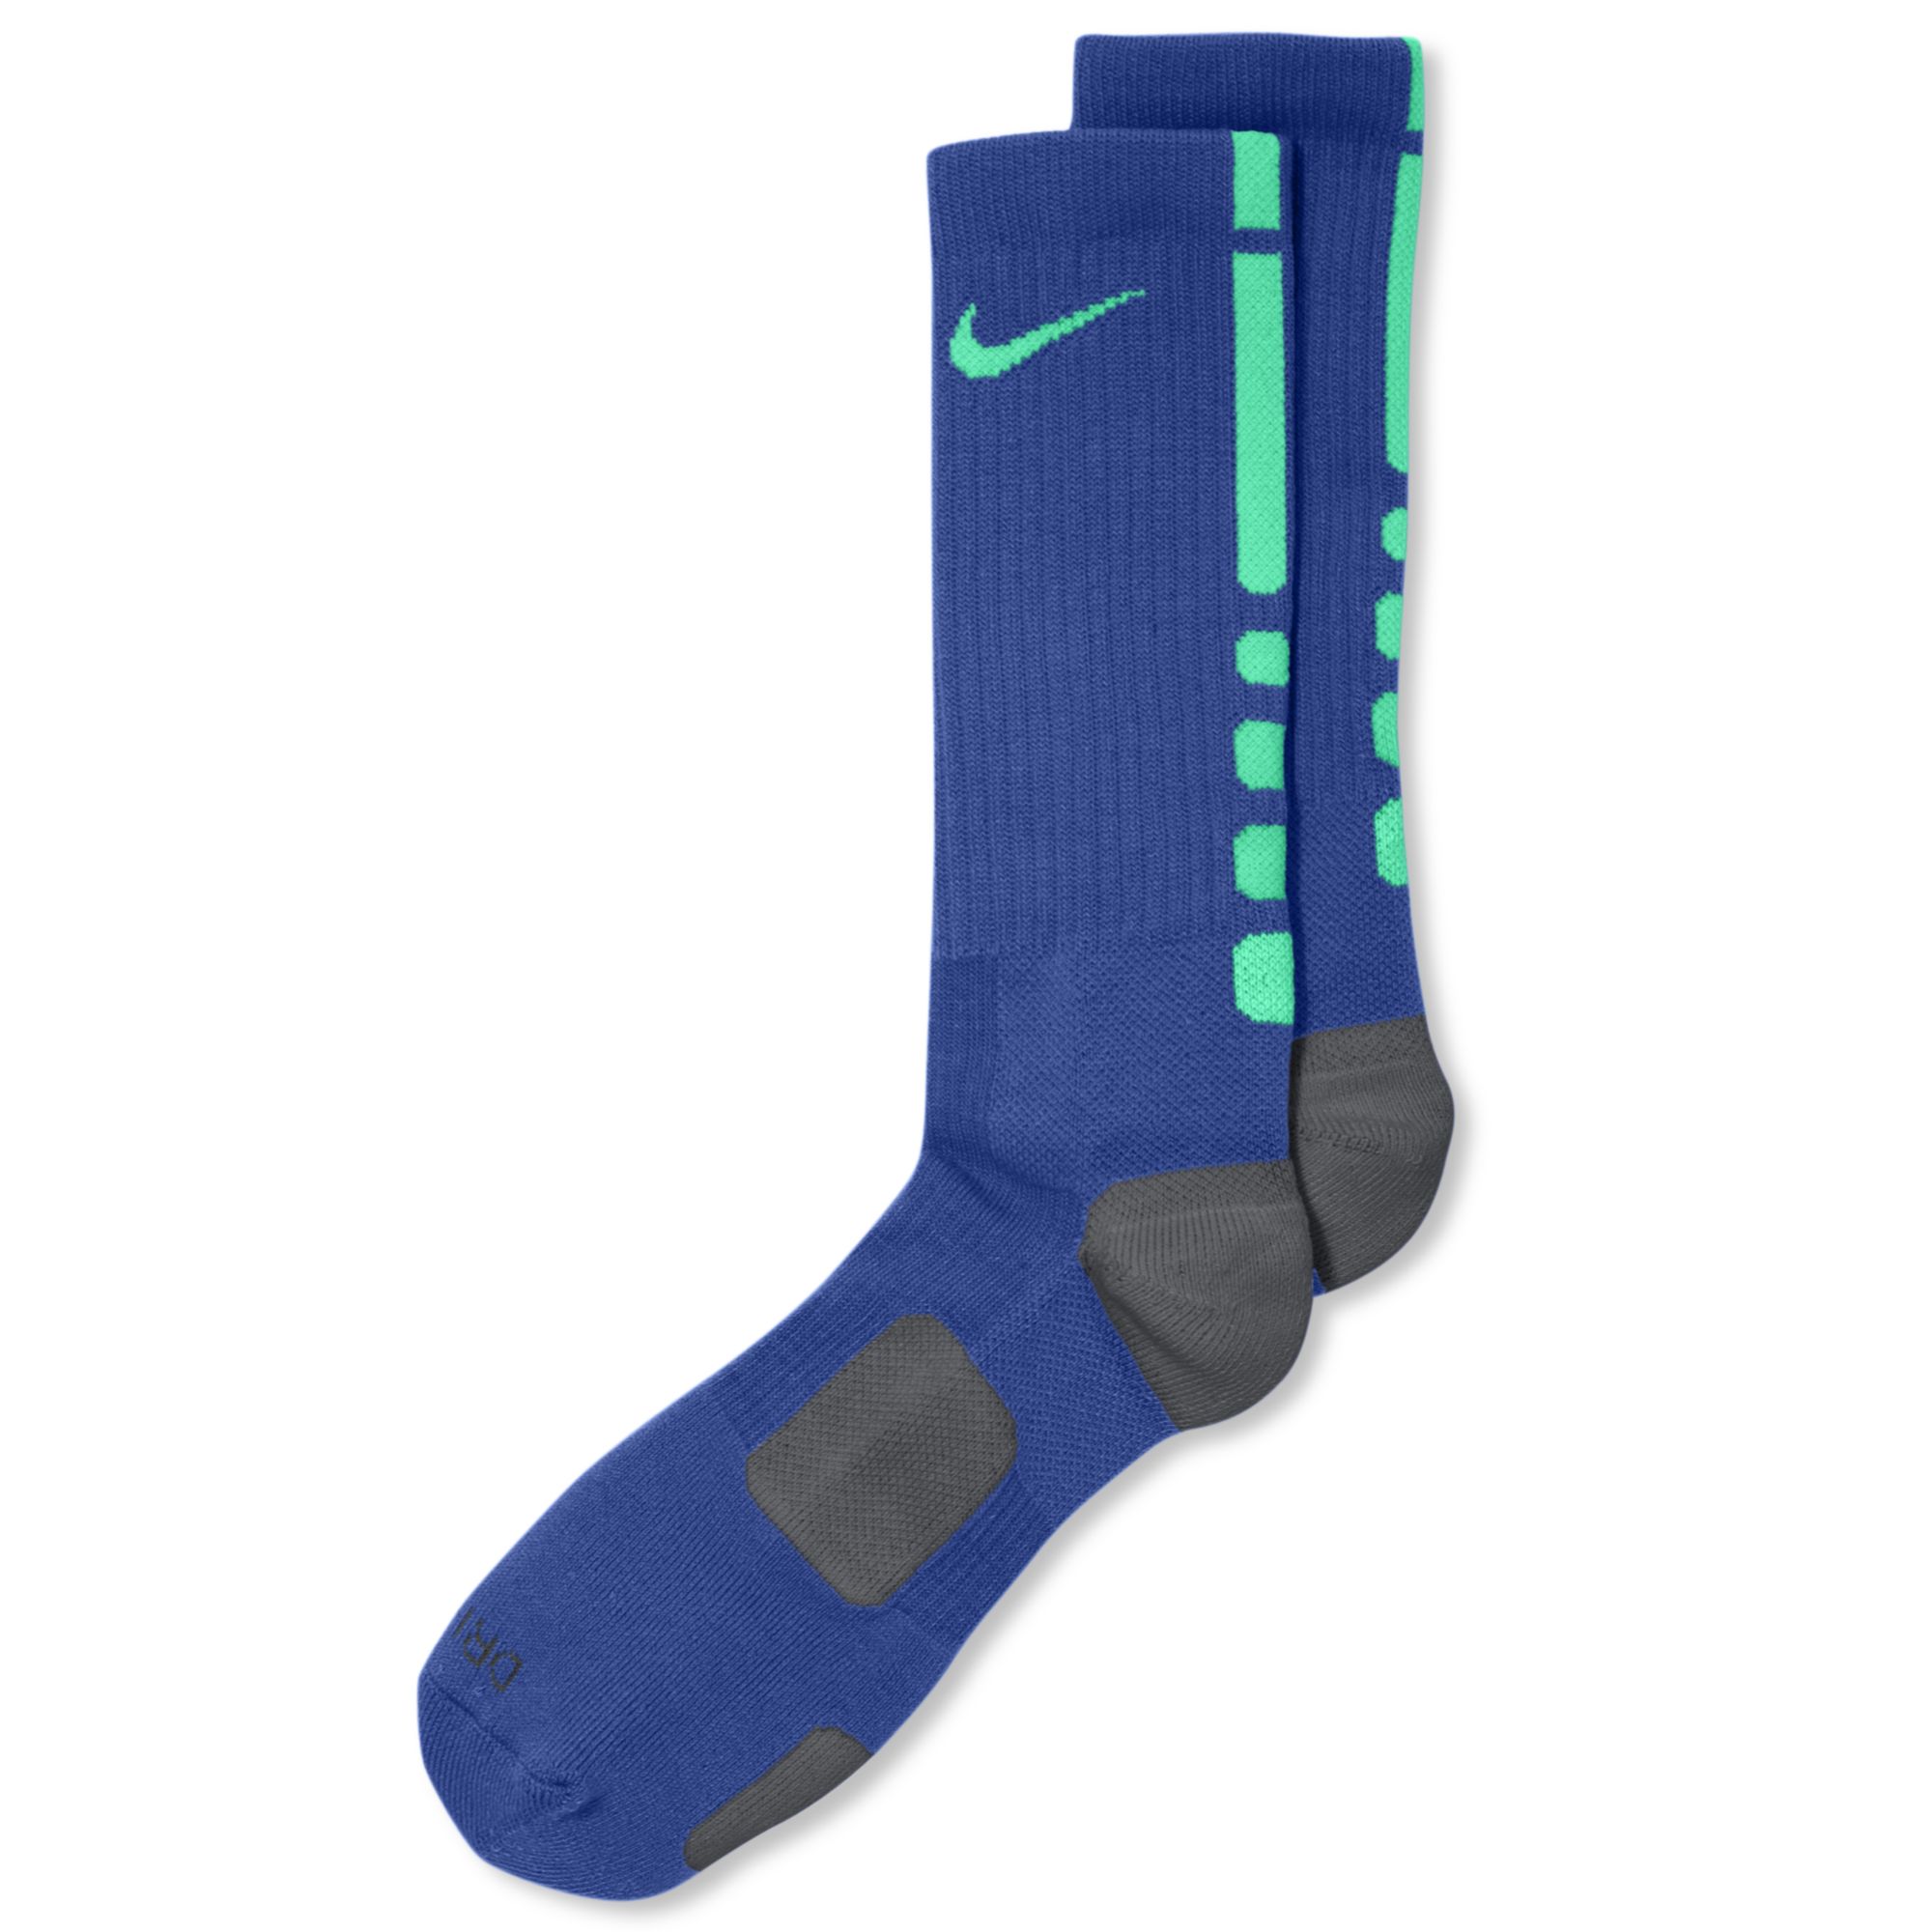 blue and green elite socks